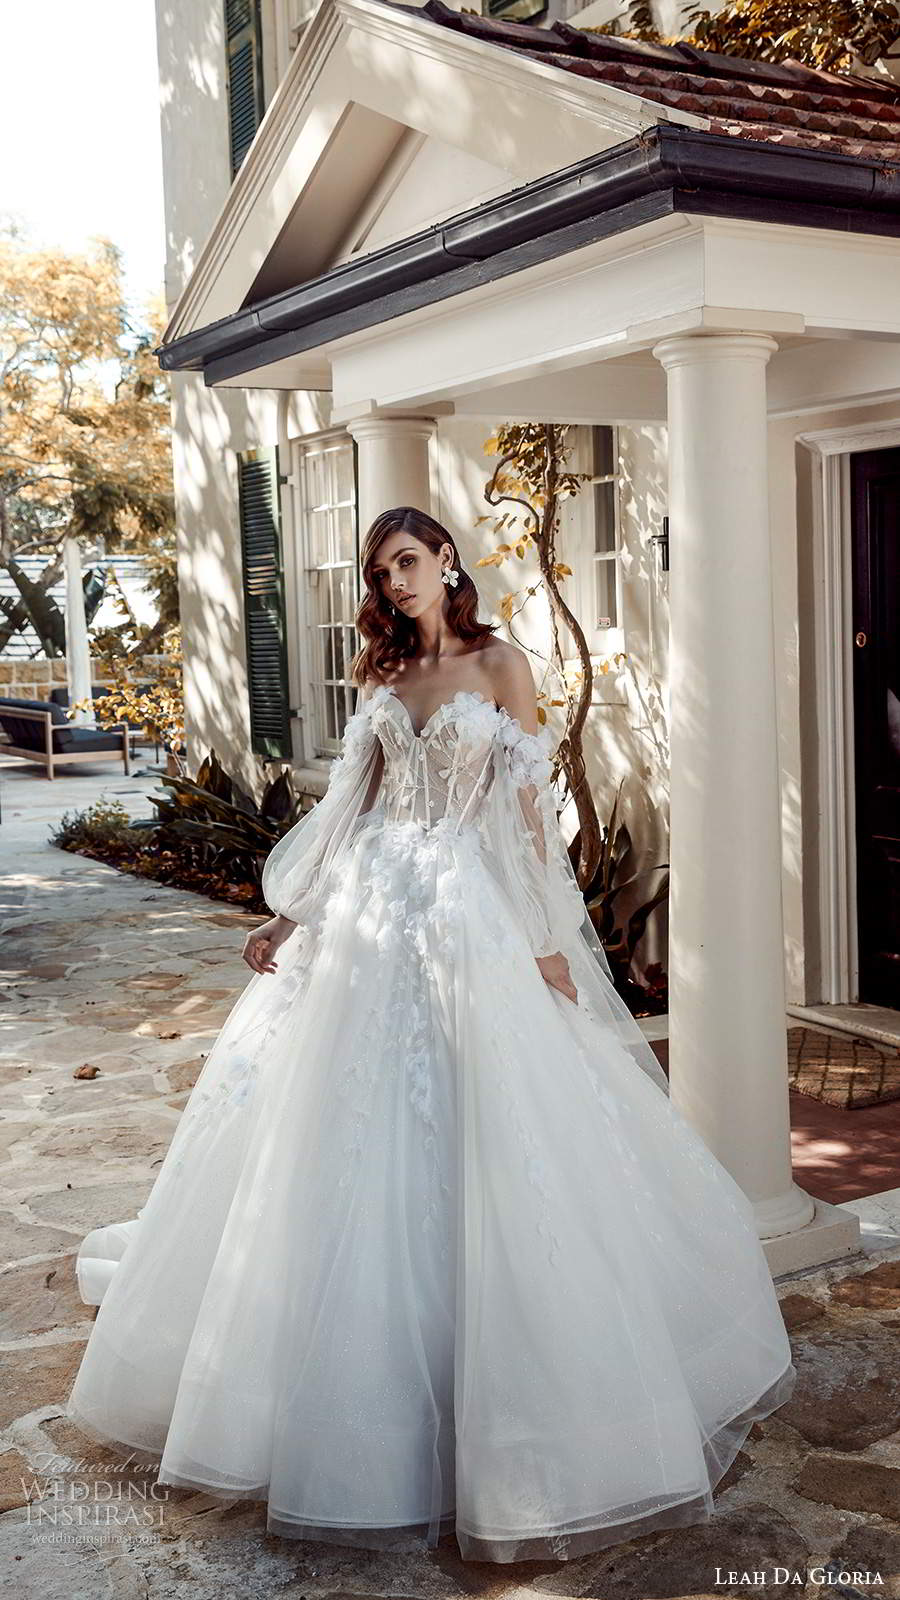 leah da gloria 2020 bridal couture illusion bishop sleeves off shoulder sweetheart neckline embellished bodice ball gown wedding dress chapel train (6) mv